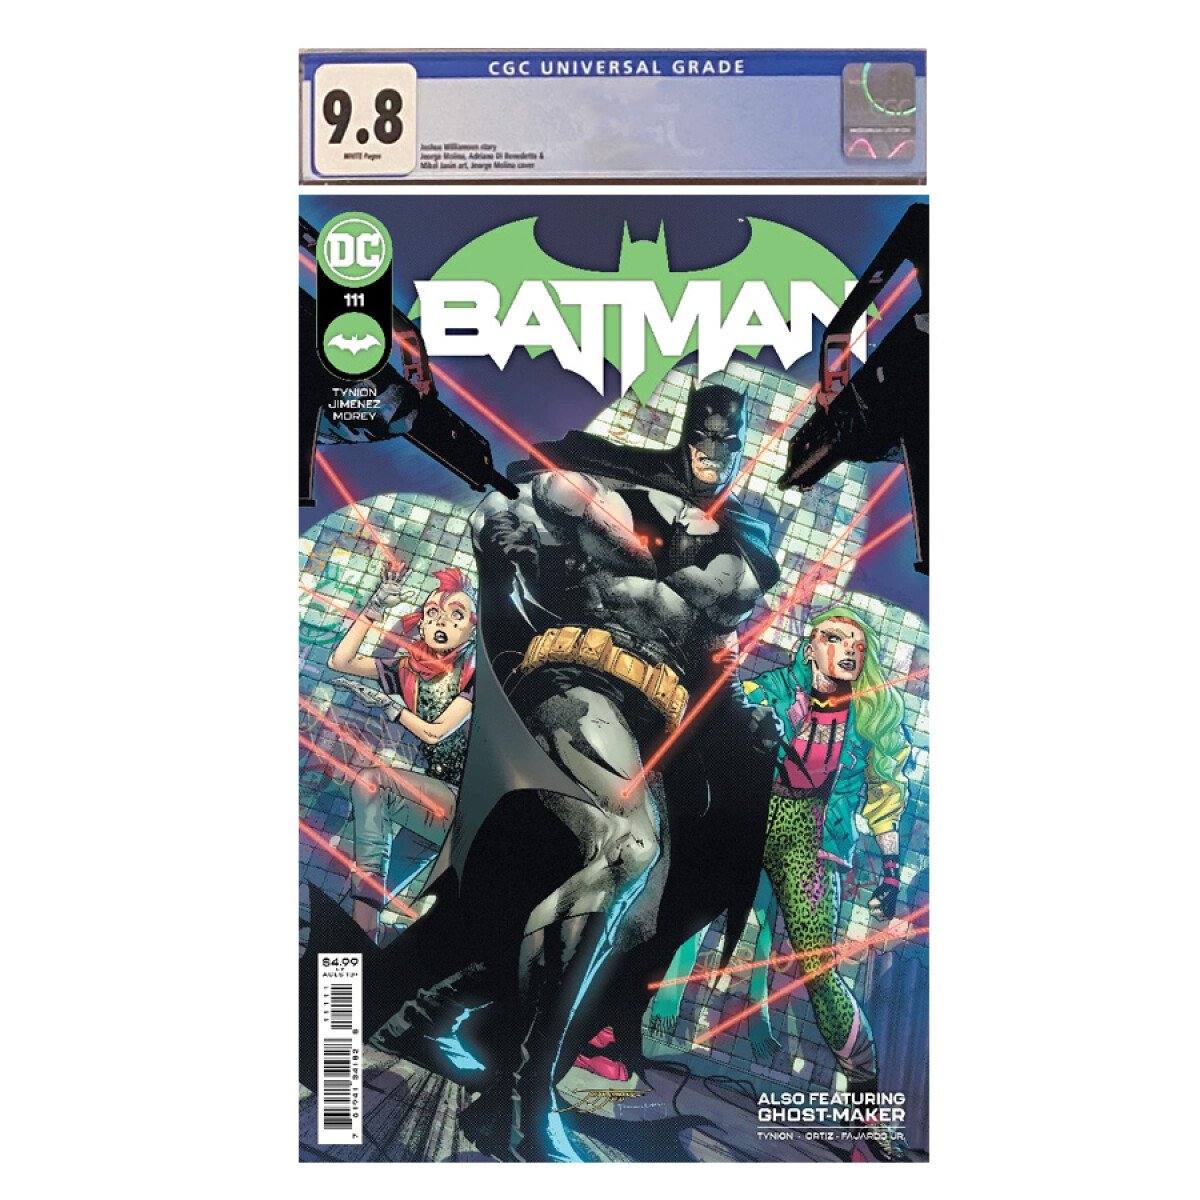 CGC Universal Grade Comic - Batman Ghost-Maker · Batman #111 